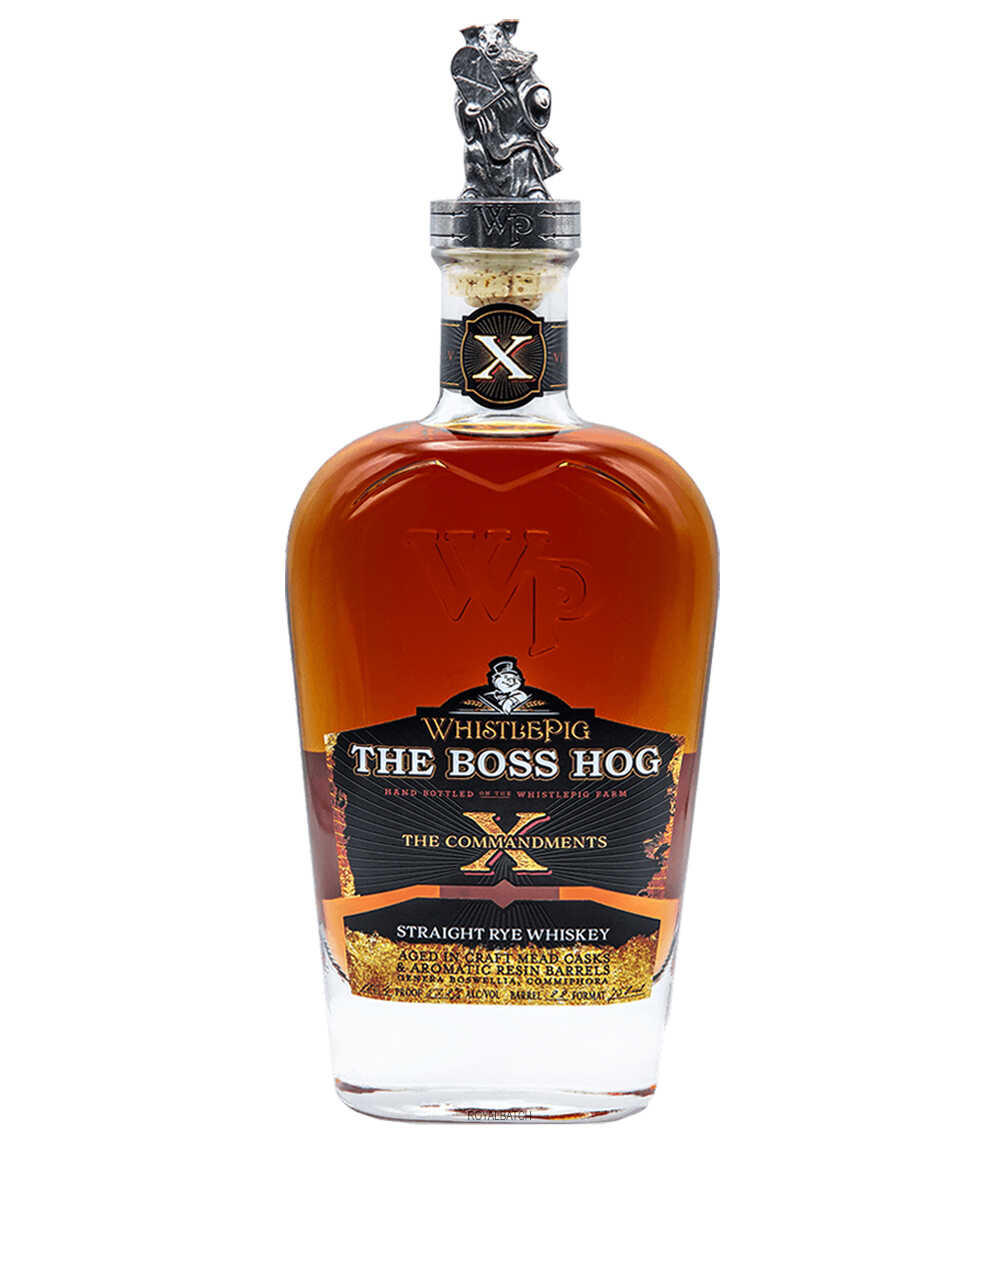 WhistlePig The Boss Hog X The Commandments Straight Rye Whiskey